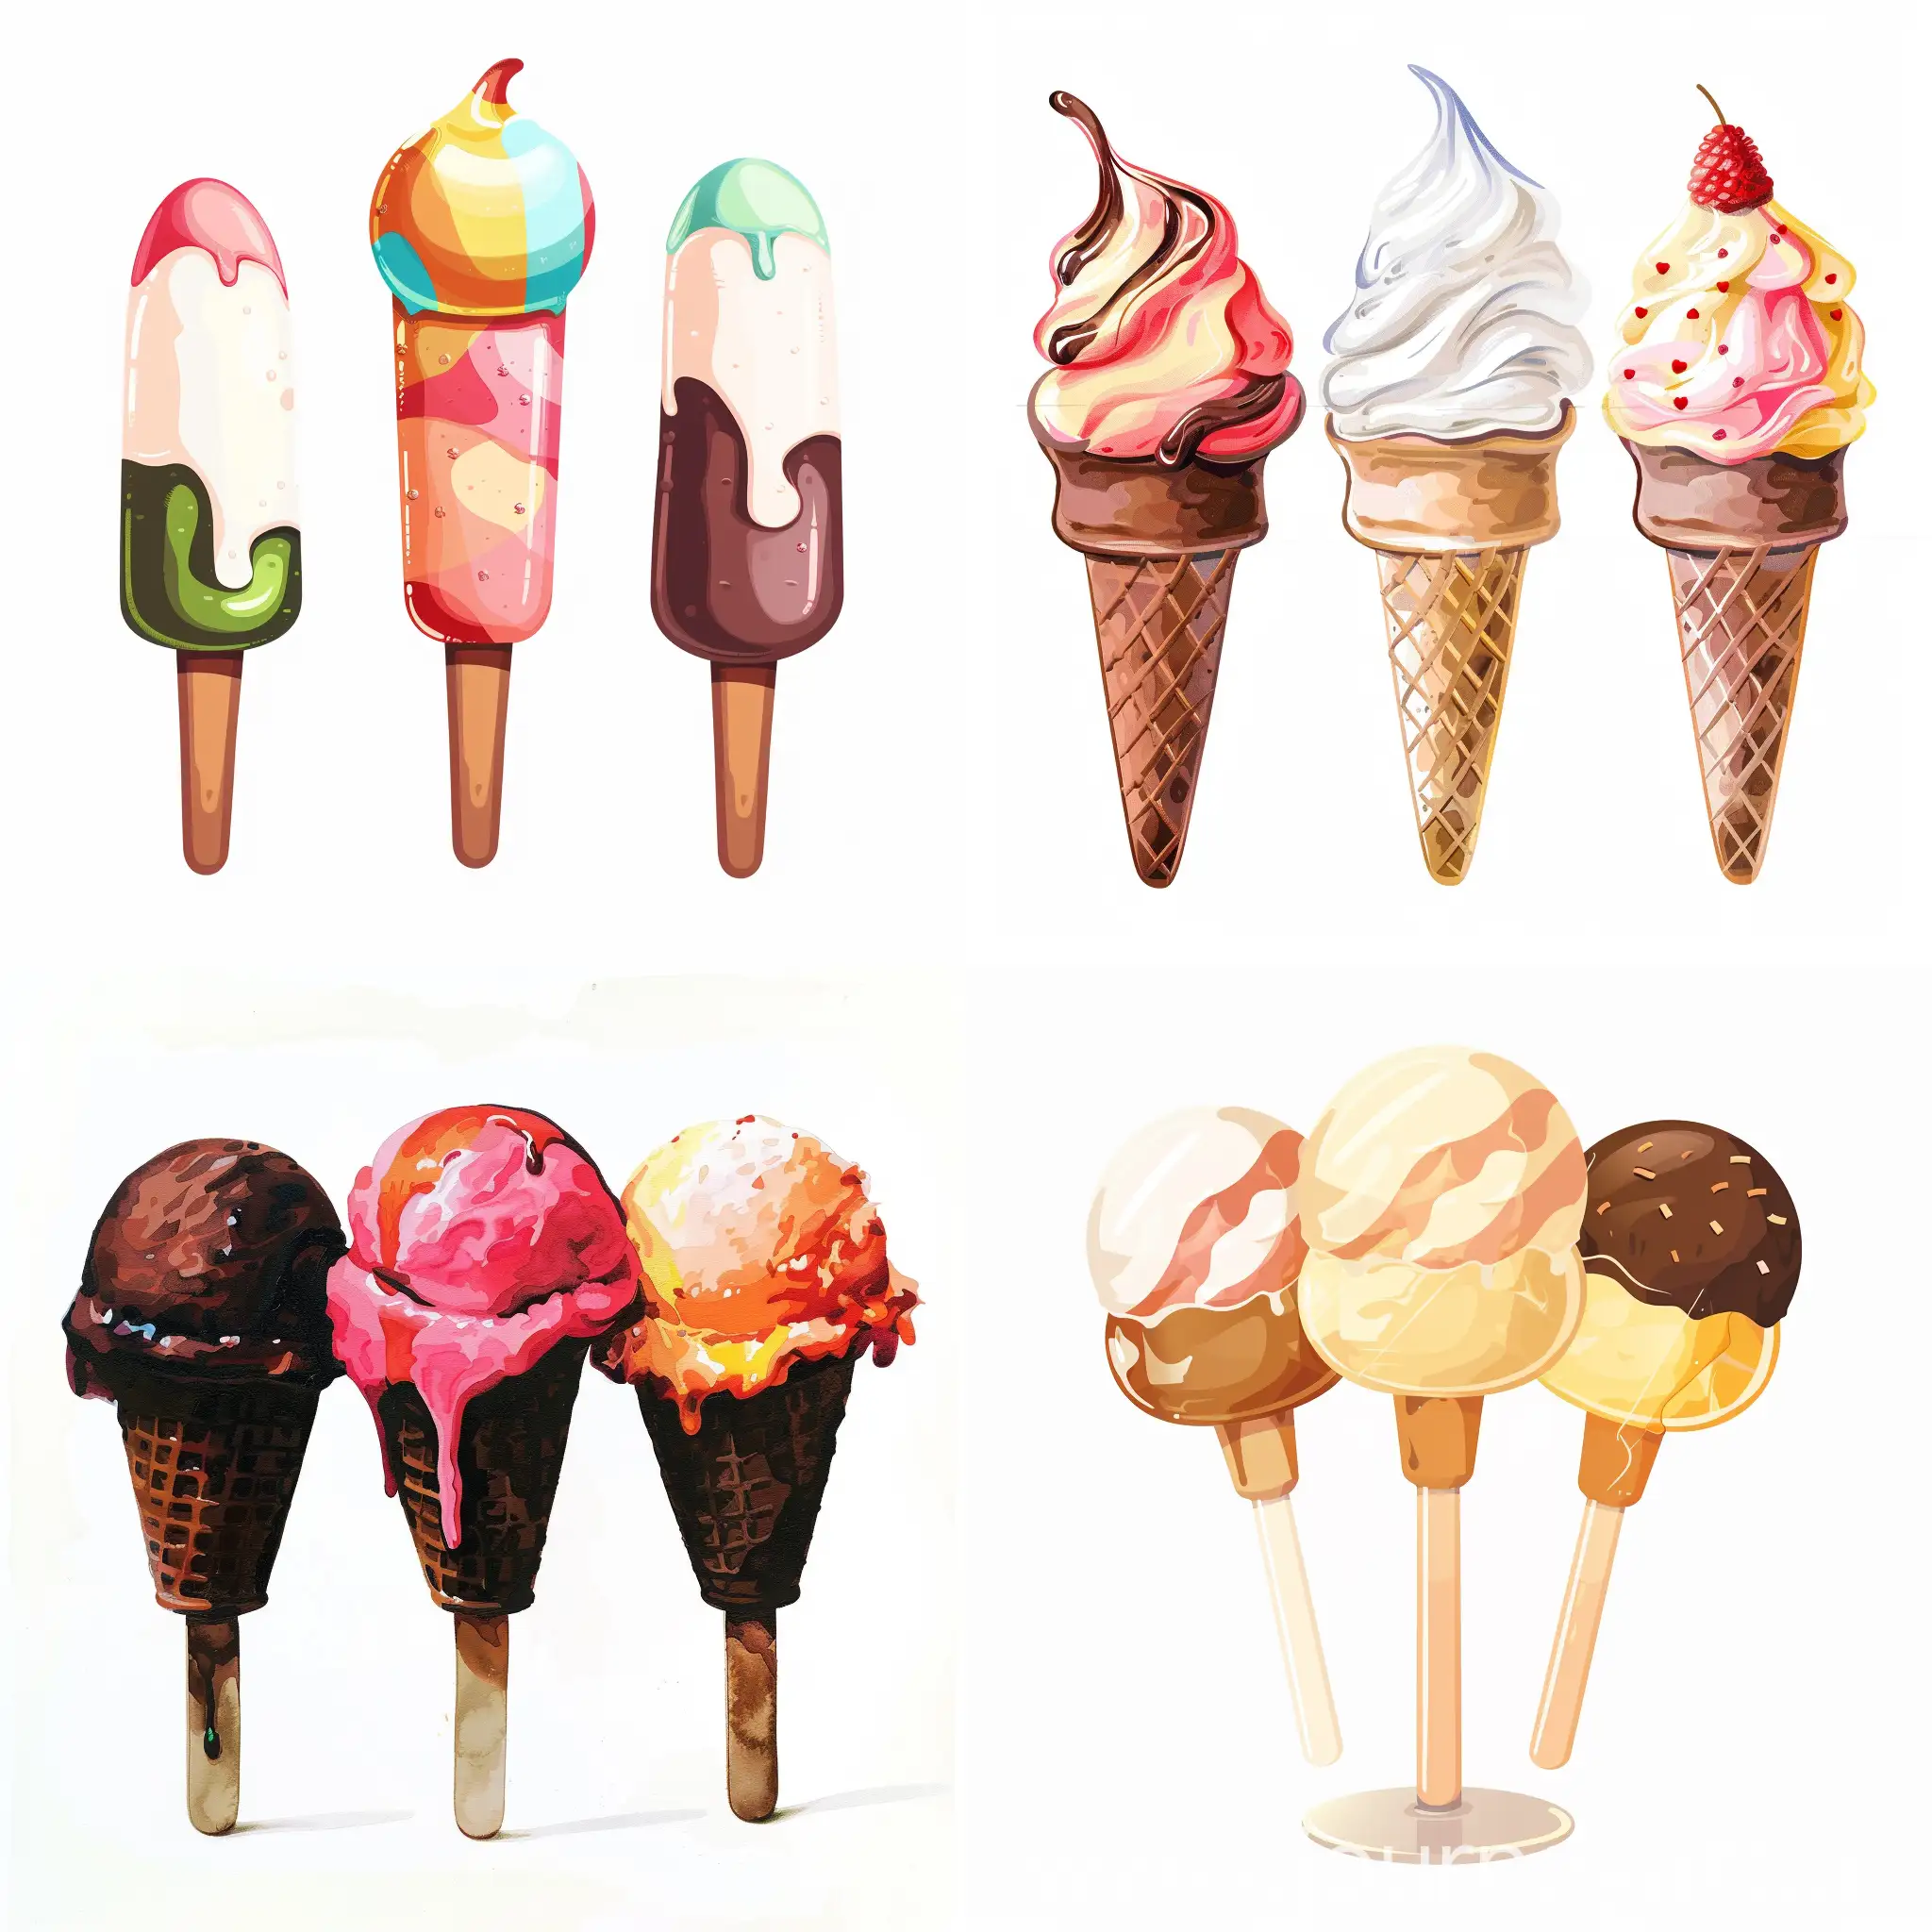 Colorful-Ice-Cream-Pictogram-Art-on-White-Background